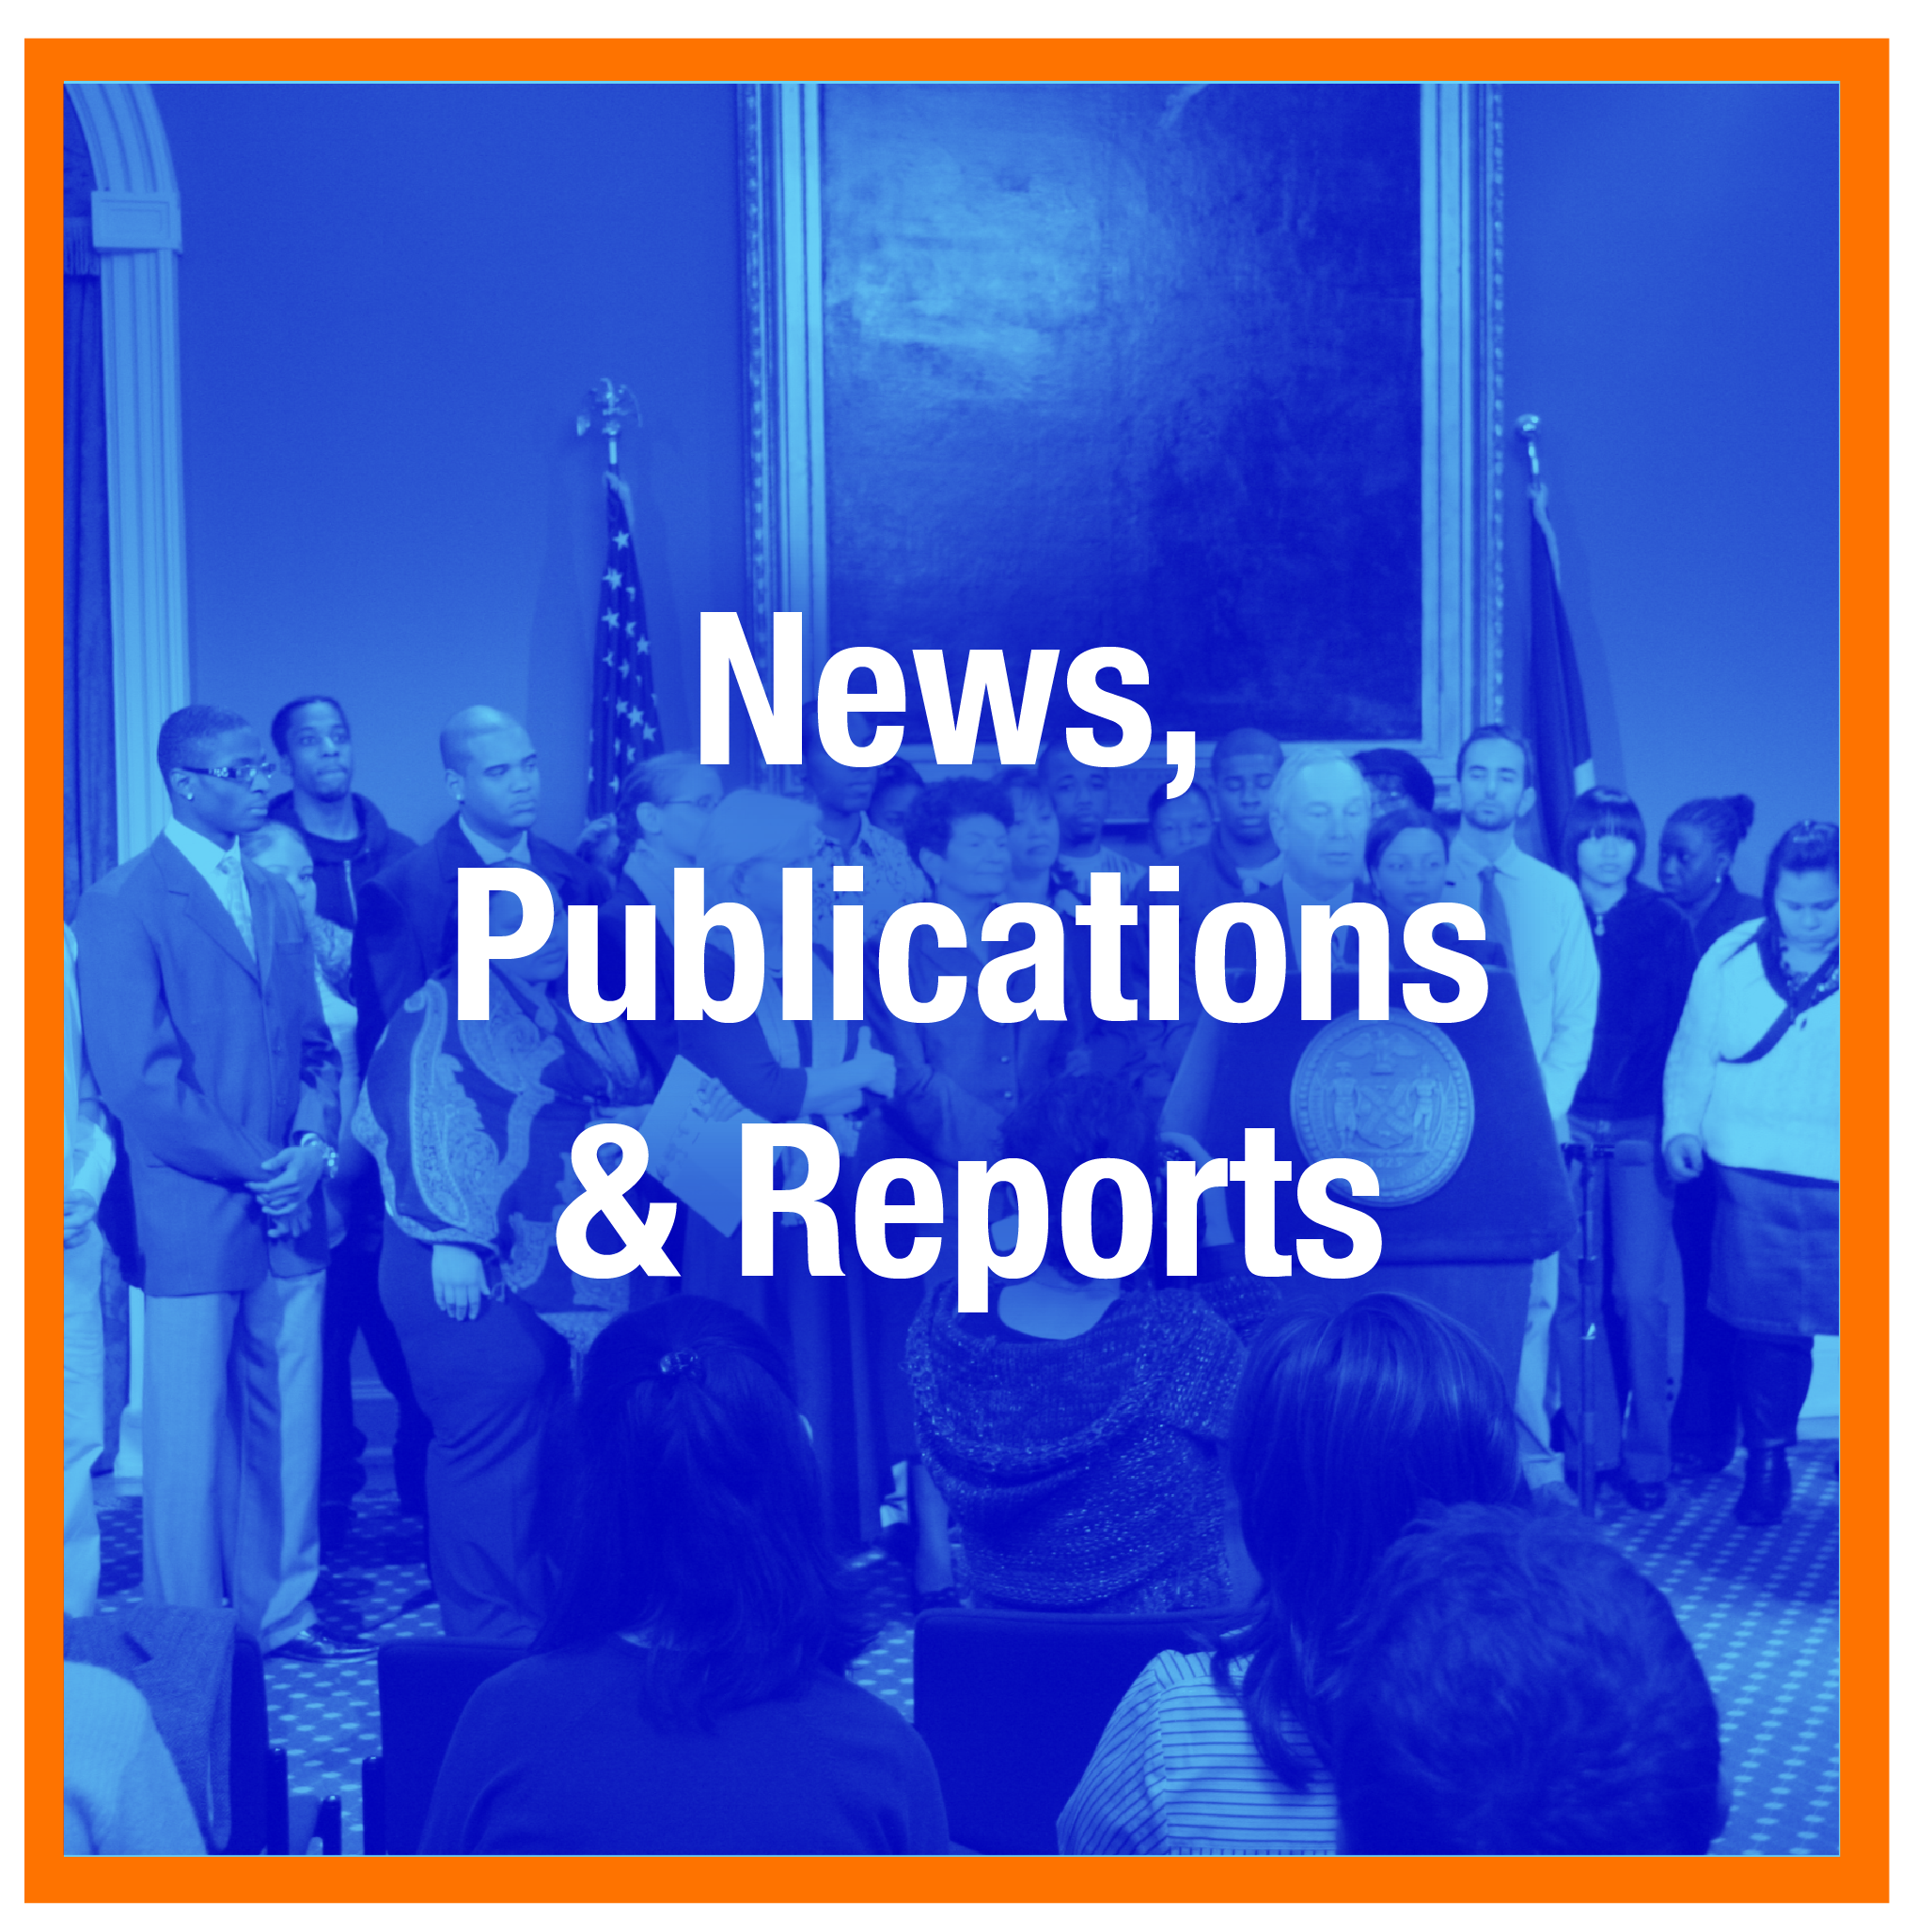 NEWS, PUBLICATIONS & REPORTS 